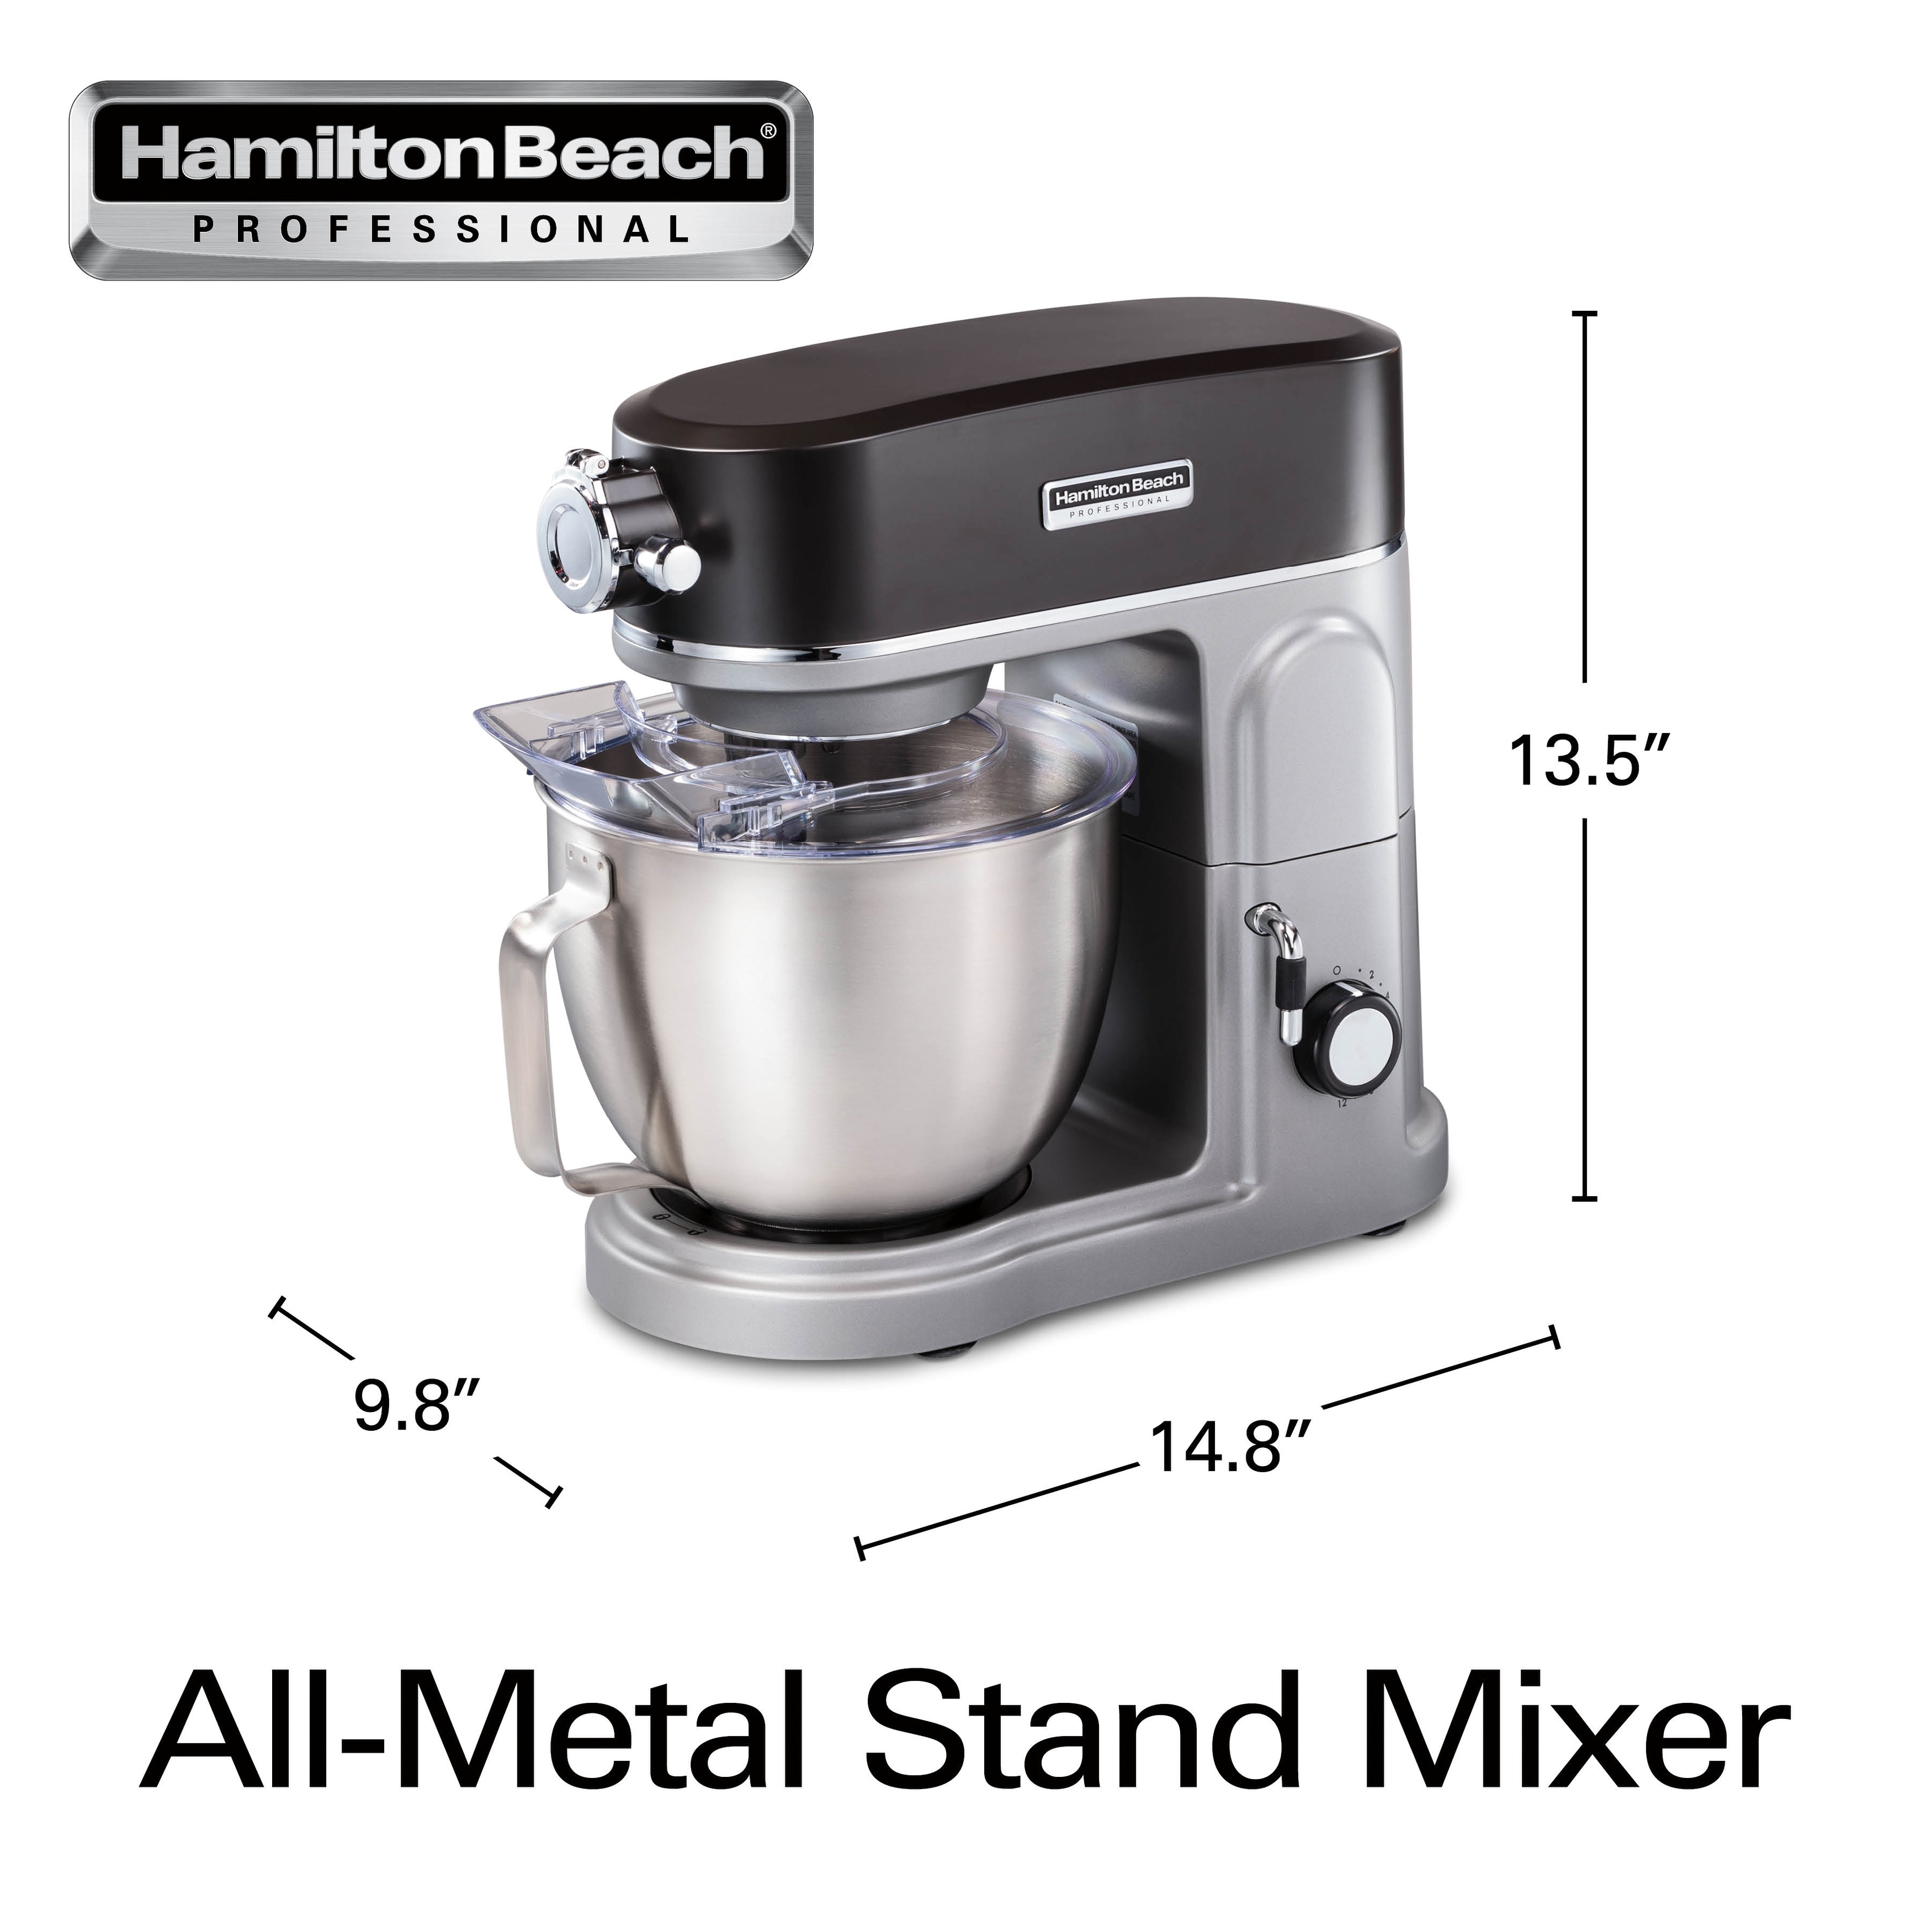 Hamilton Beach Electrics 4.5-Quart All-Metal Stand Mixer in